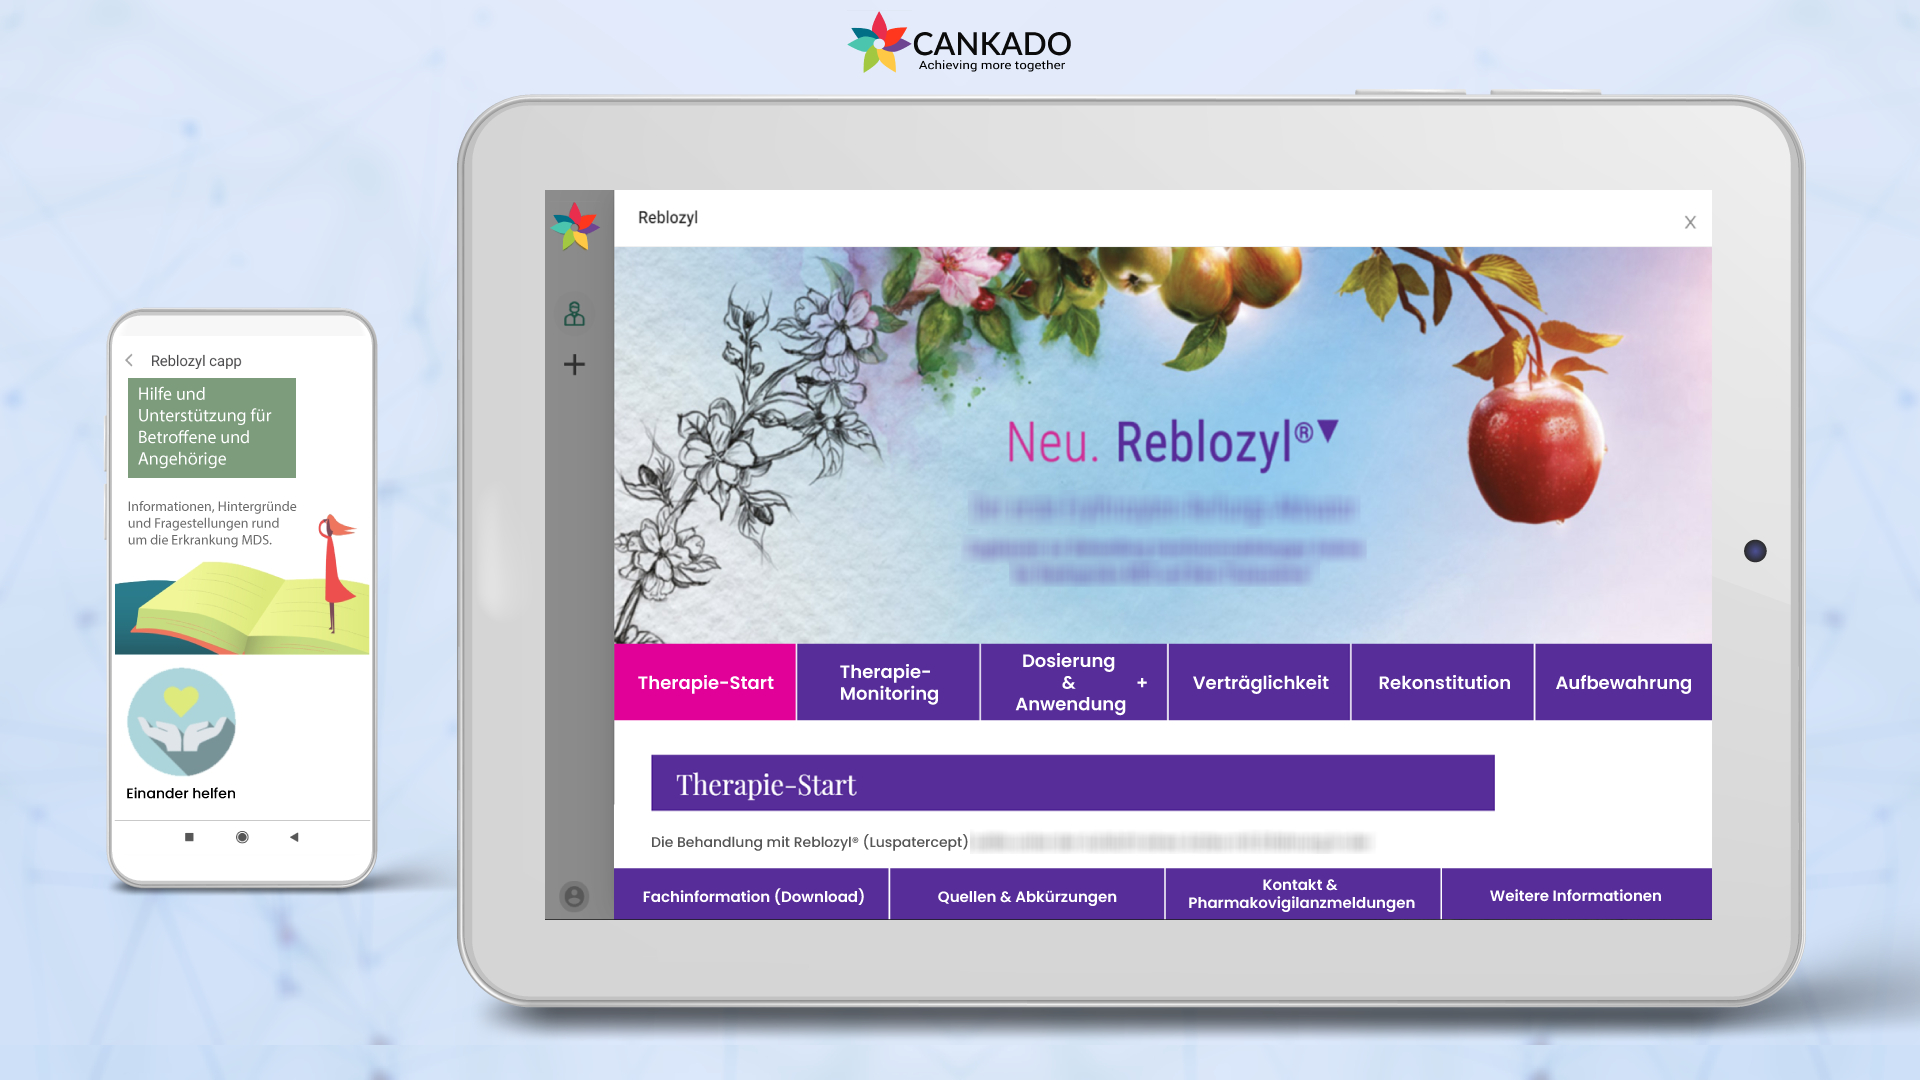 CANKADO’s Companion-APP Solution provides Drug-Optimised Digital Applications for Pharmaceutical Companies